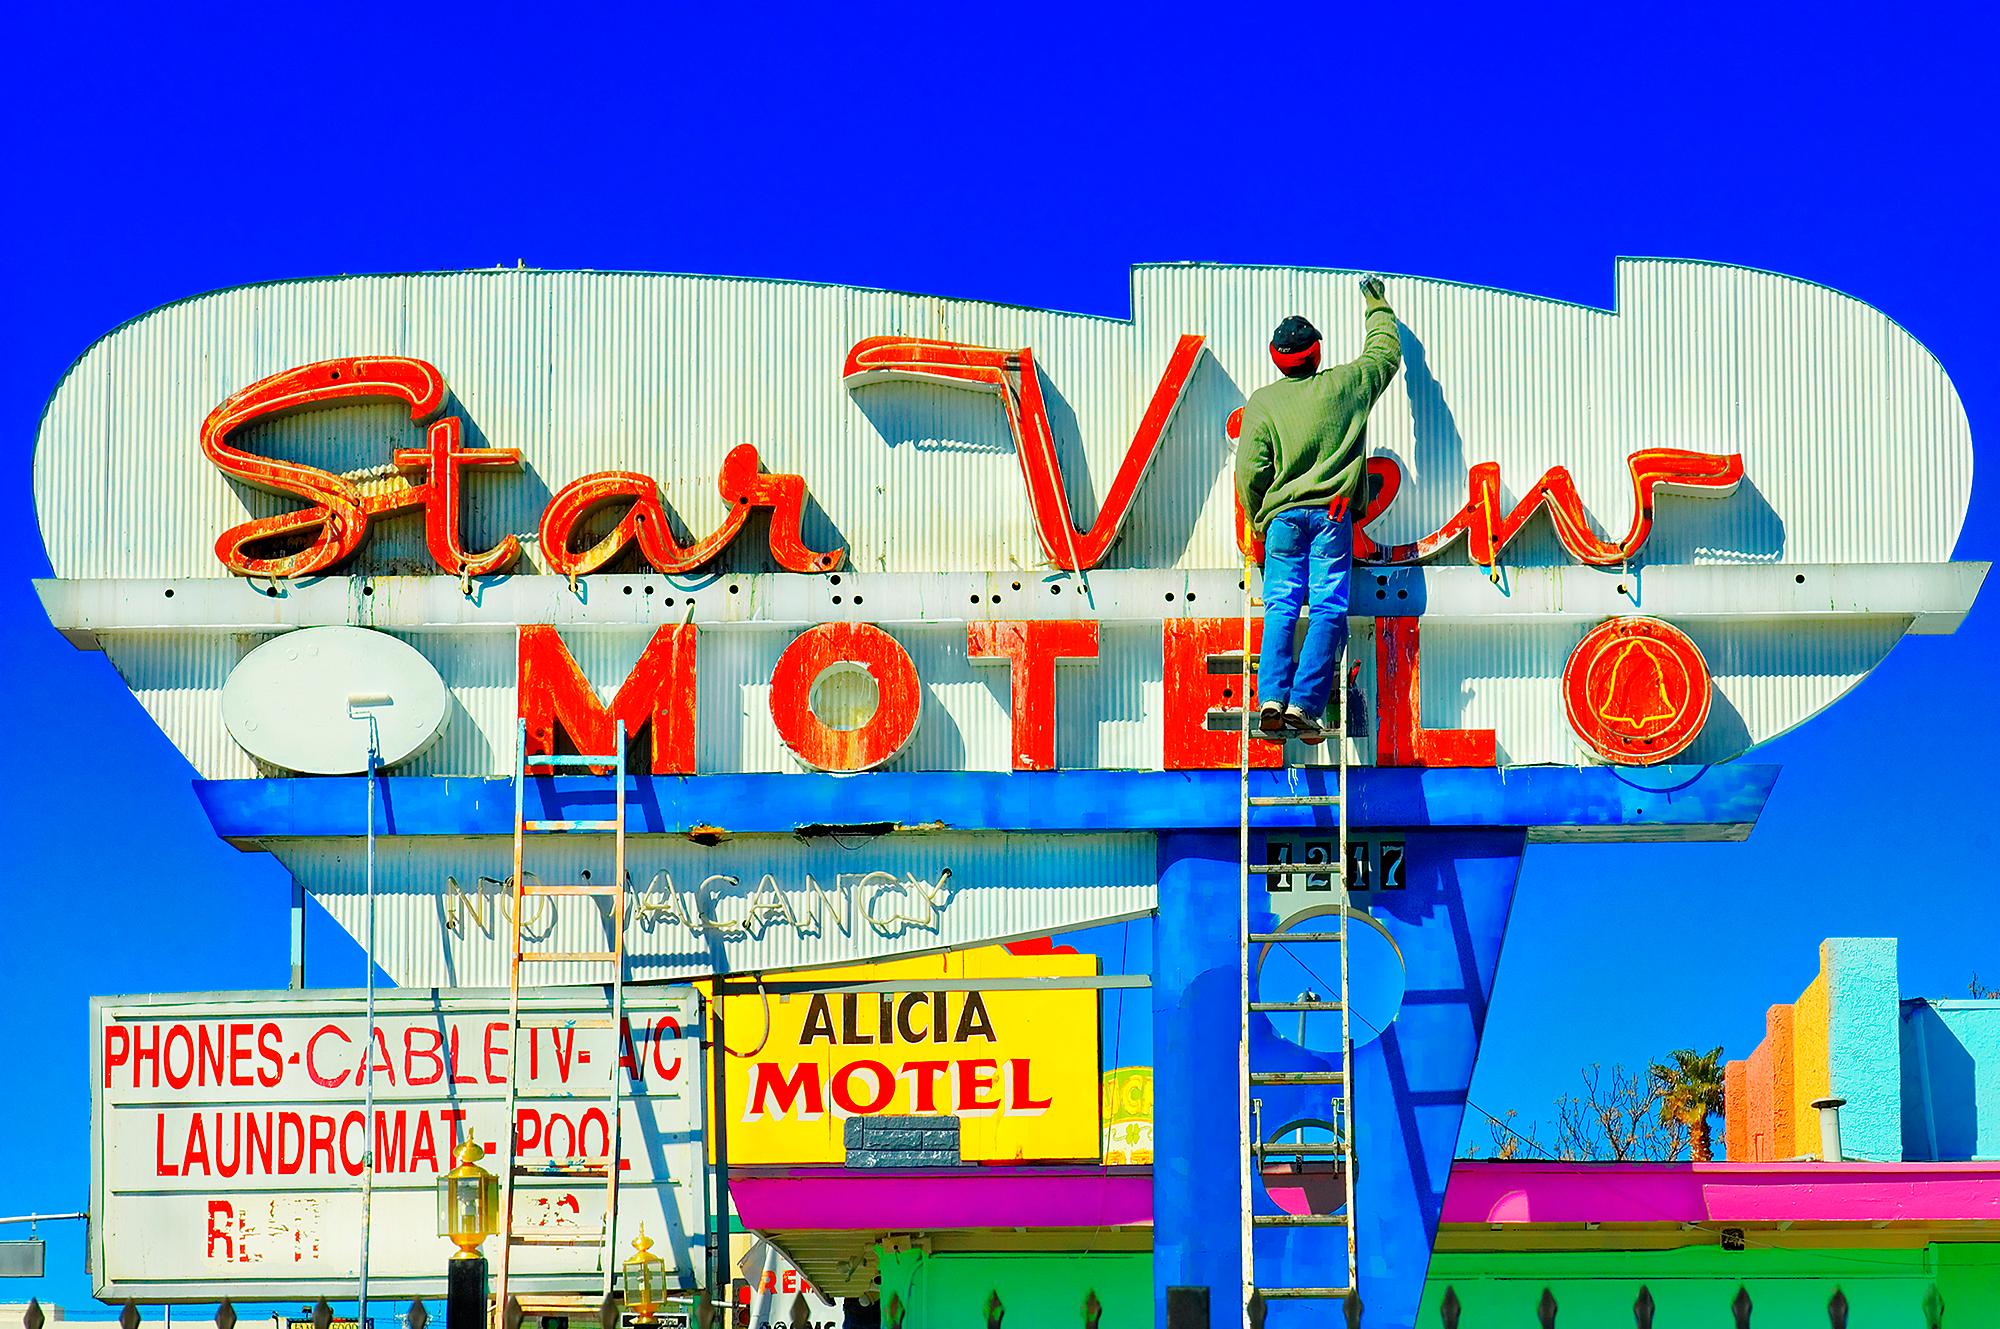 Mid- Century Star View Motel Fremont Street Las Vegas, Landscape Photography